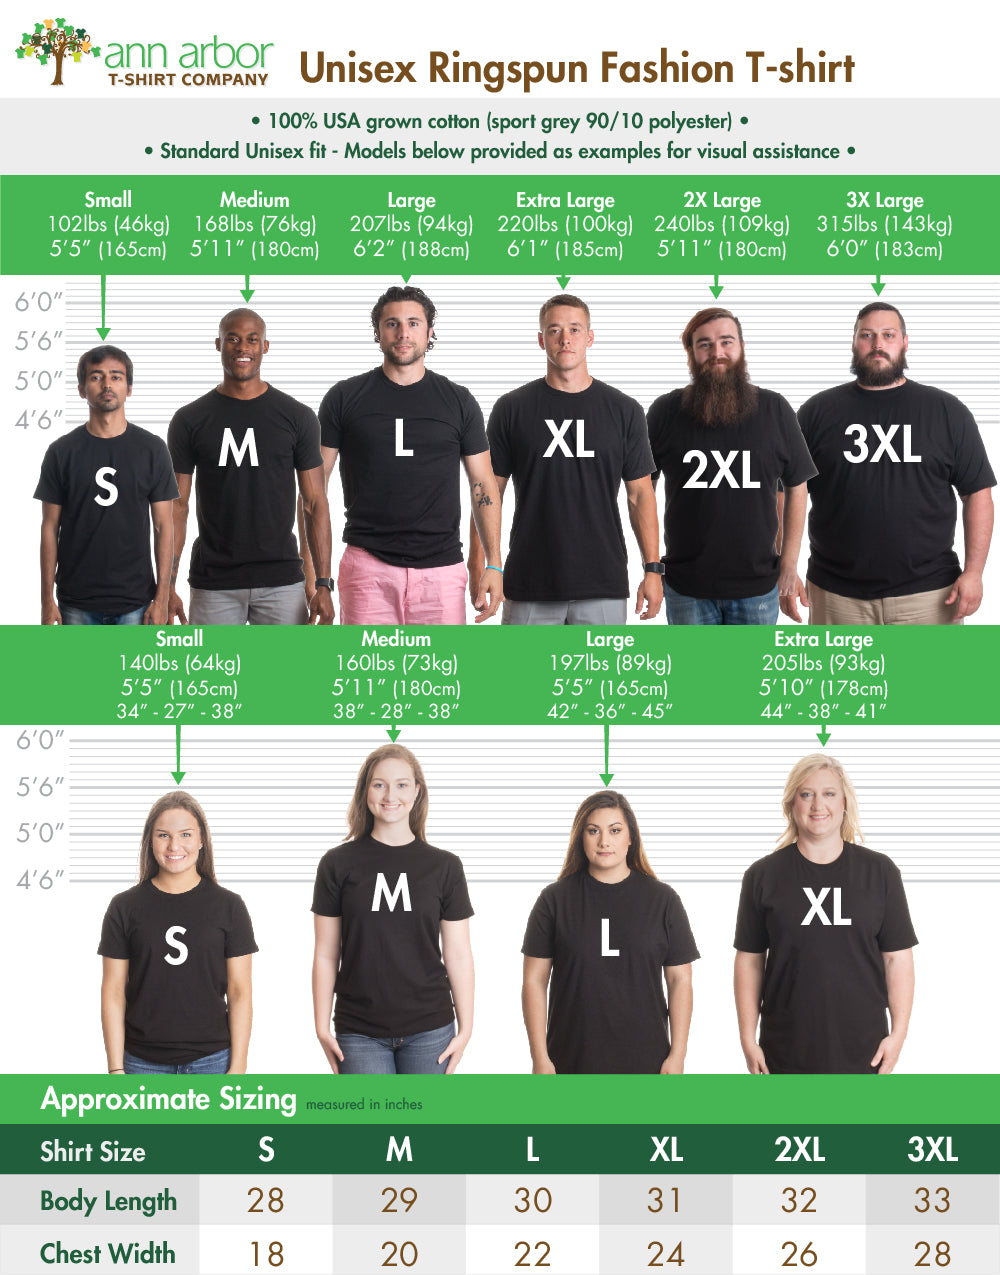 Funny science t shirts Geek Science tee Shirt' Men's T-Shirt